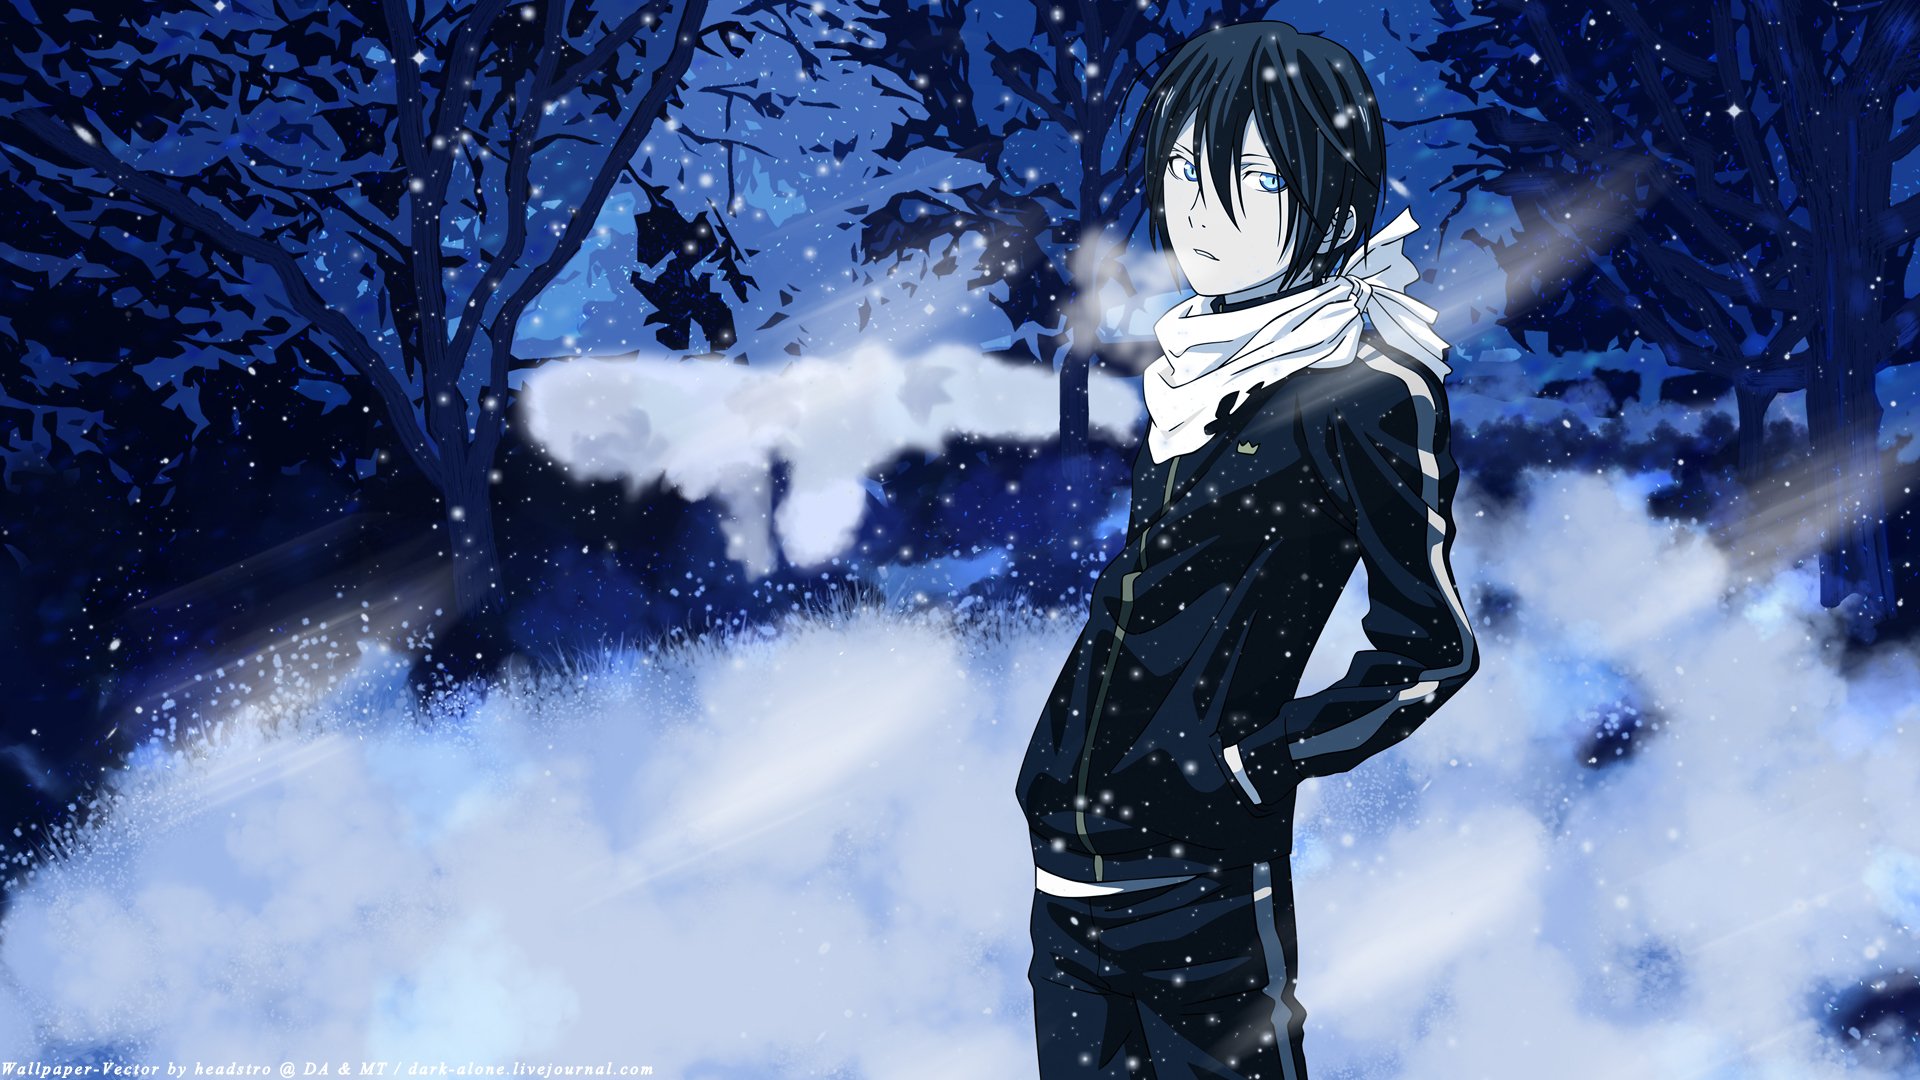 noragami wallpaper,snow,anime,winter storm,winter,sky